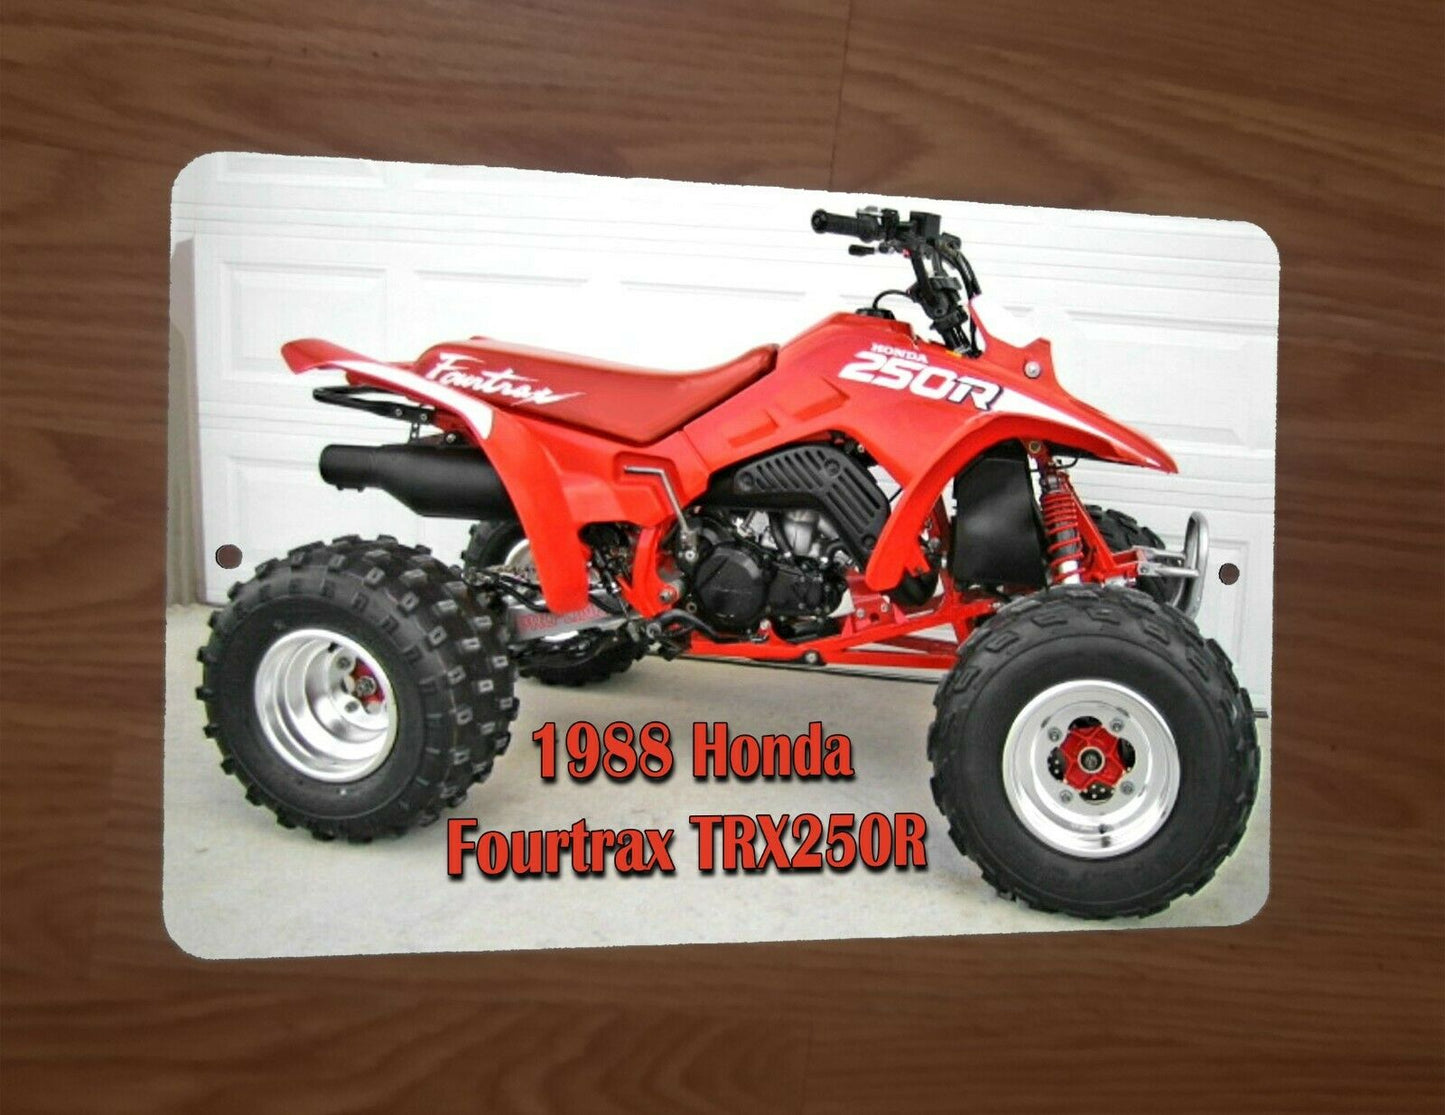 1988 Honda Fourtrax TRX250R Quad ATV Photo 8x12 Metal Wall Sign Garage Poster